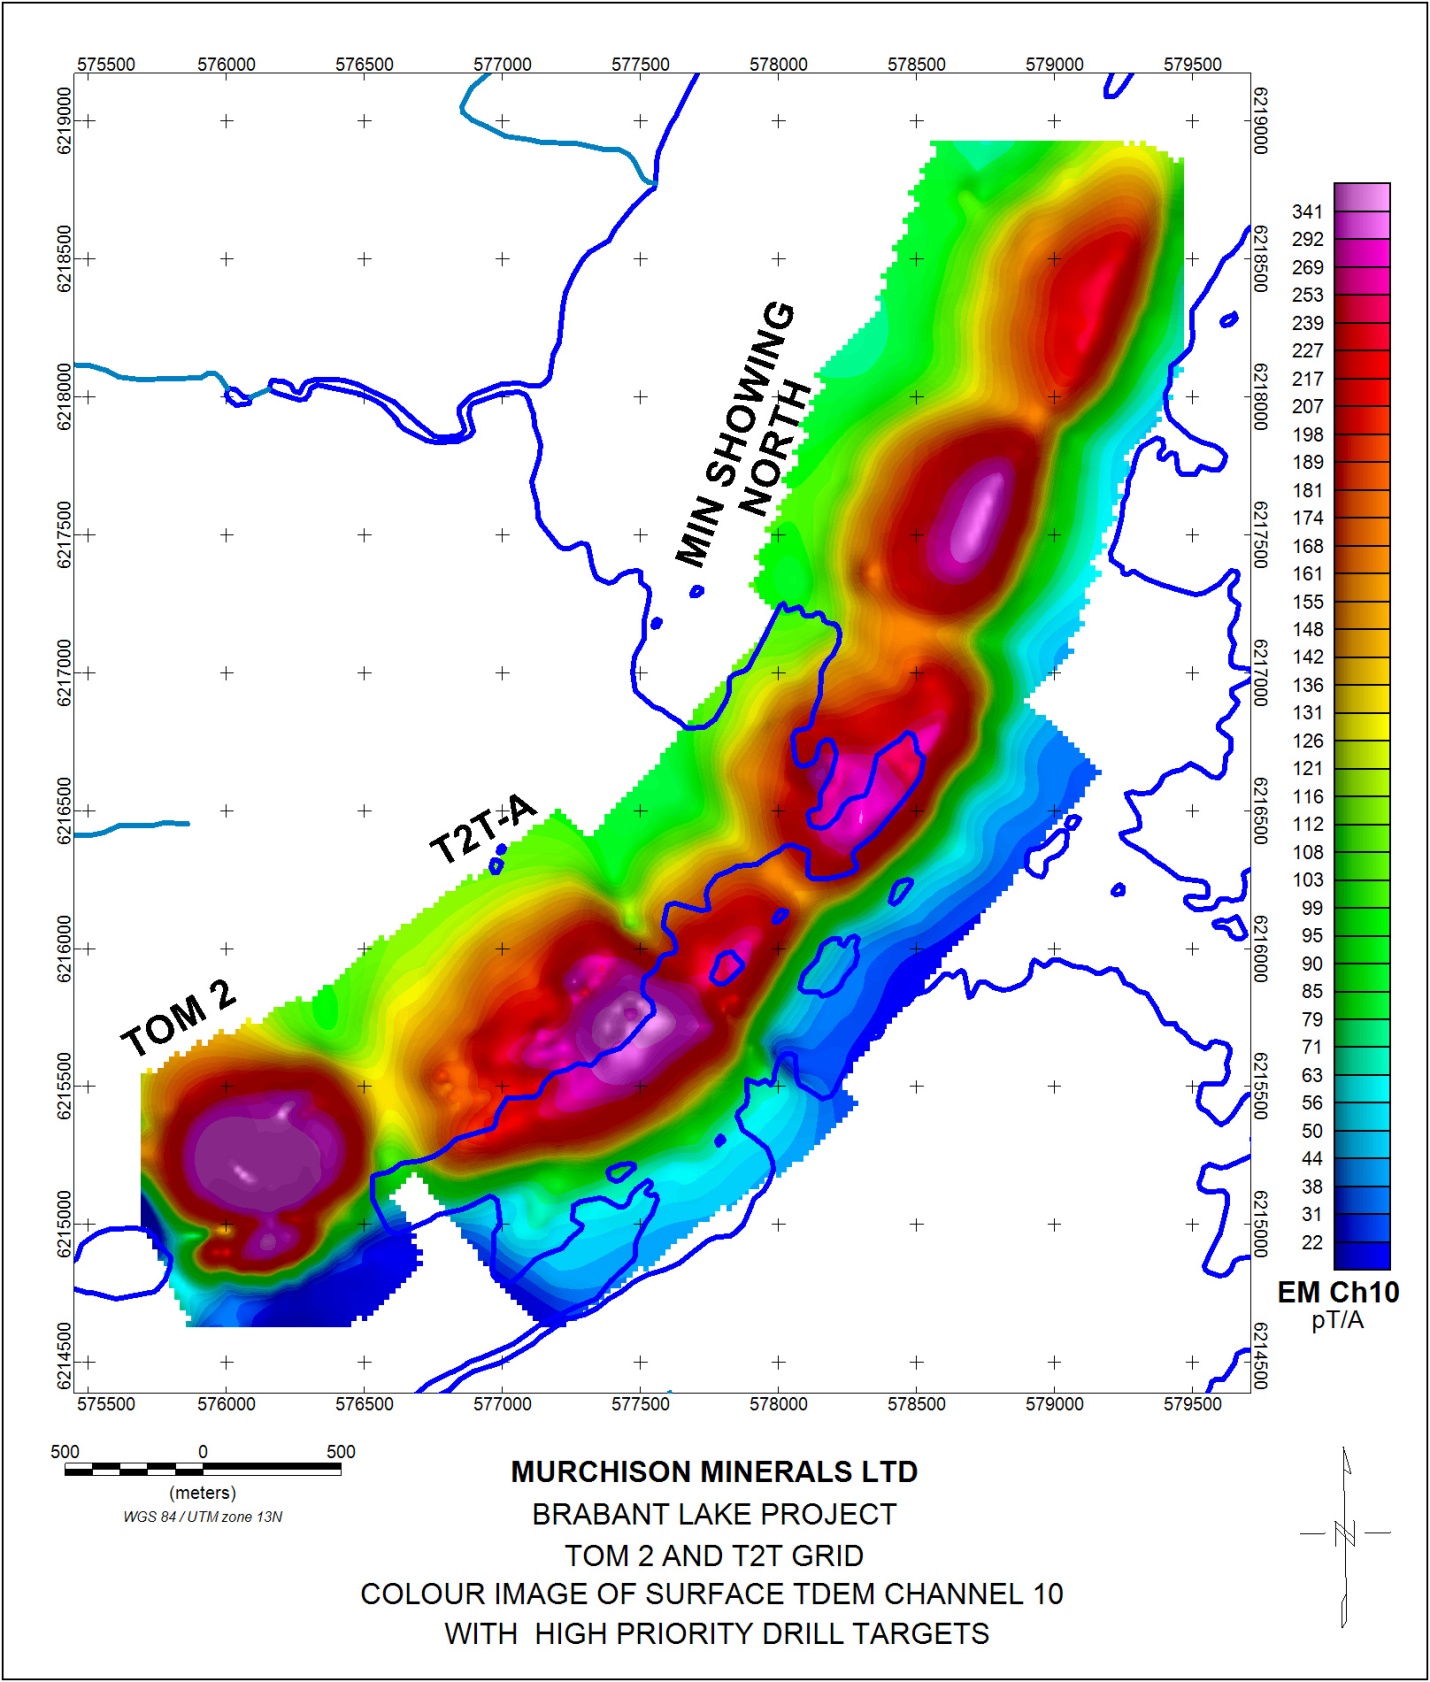 Murchison Minerals Ltd., Monday, October 28, 2019, Press release picture